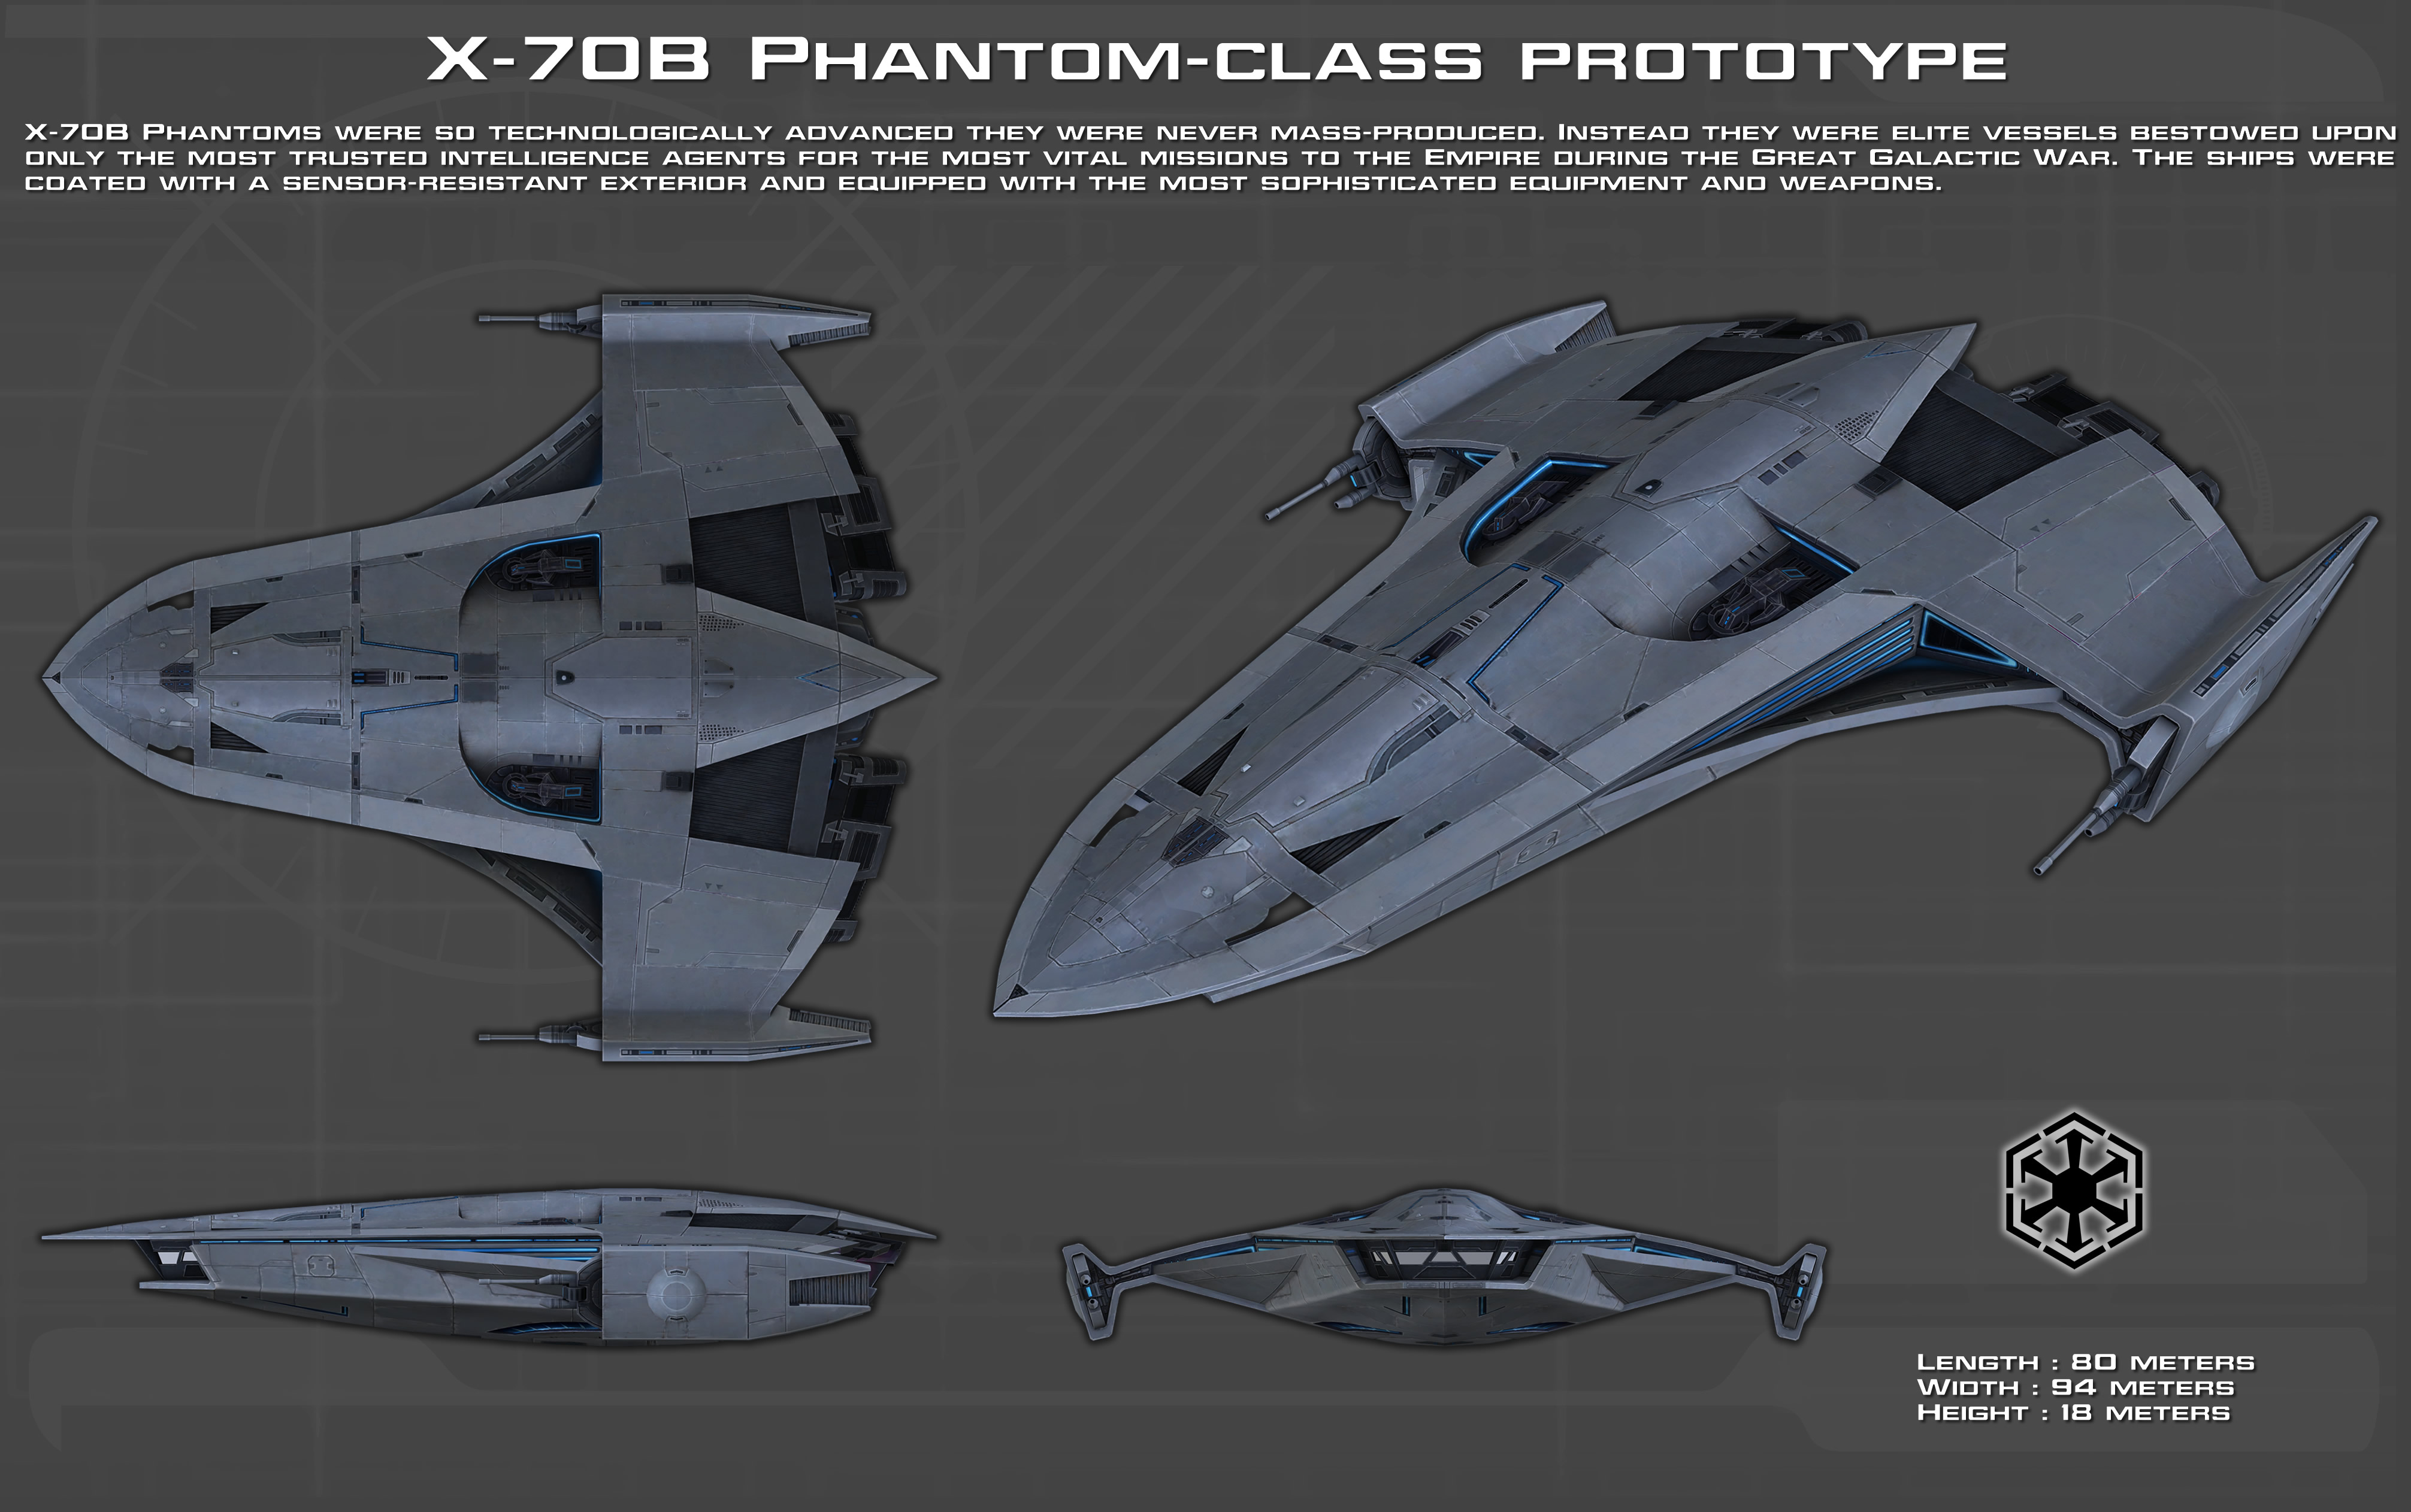 x_70b_phantom_class_prototype_ortho__new__by_unusualsuspex-d9w7ejv.jpg